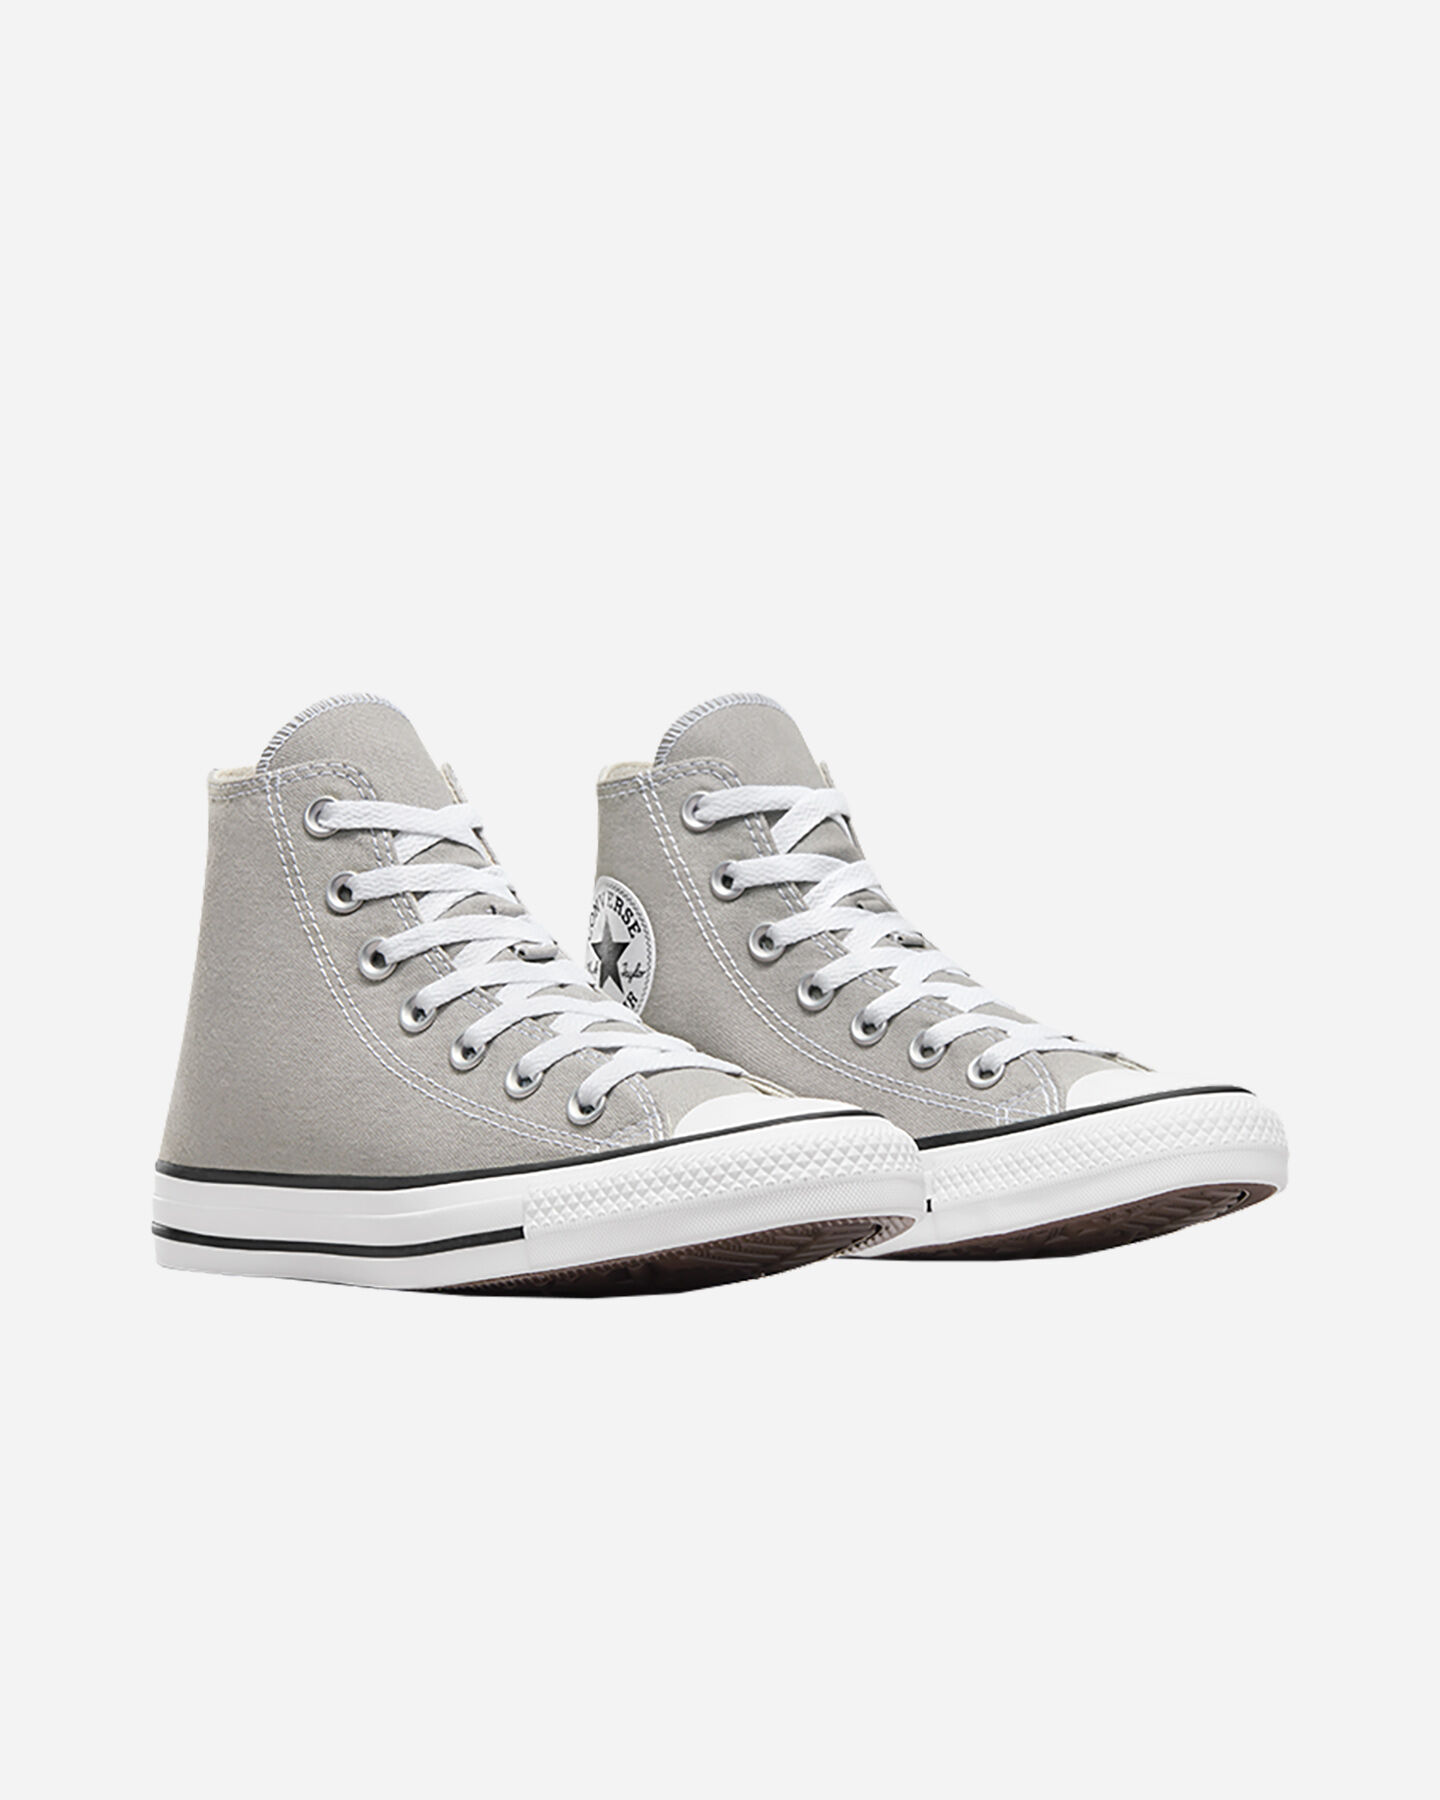  Scarpe sneakers CONVERSE CHUCK TAYLOR ALL STAR HIGH M S5671252|247|10 scatto 1